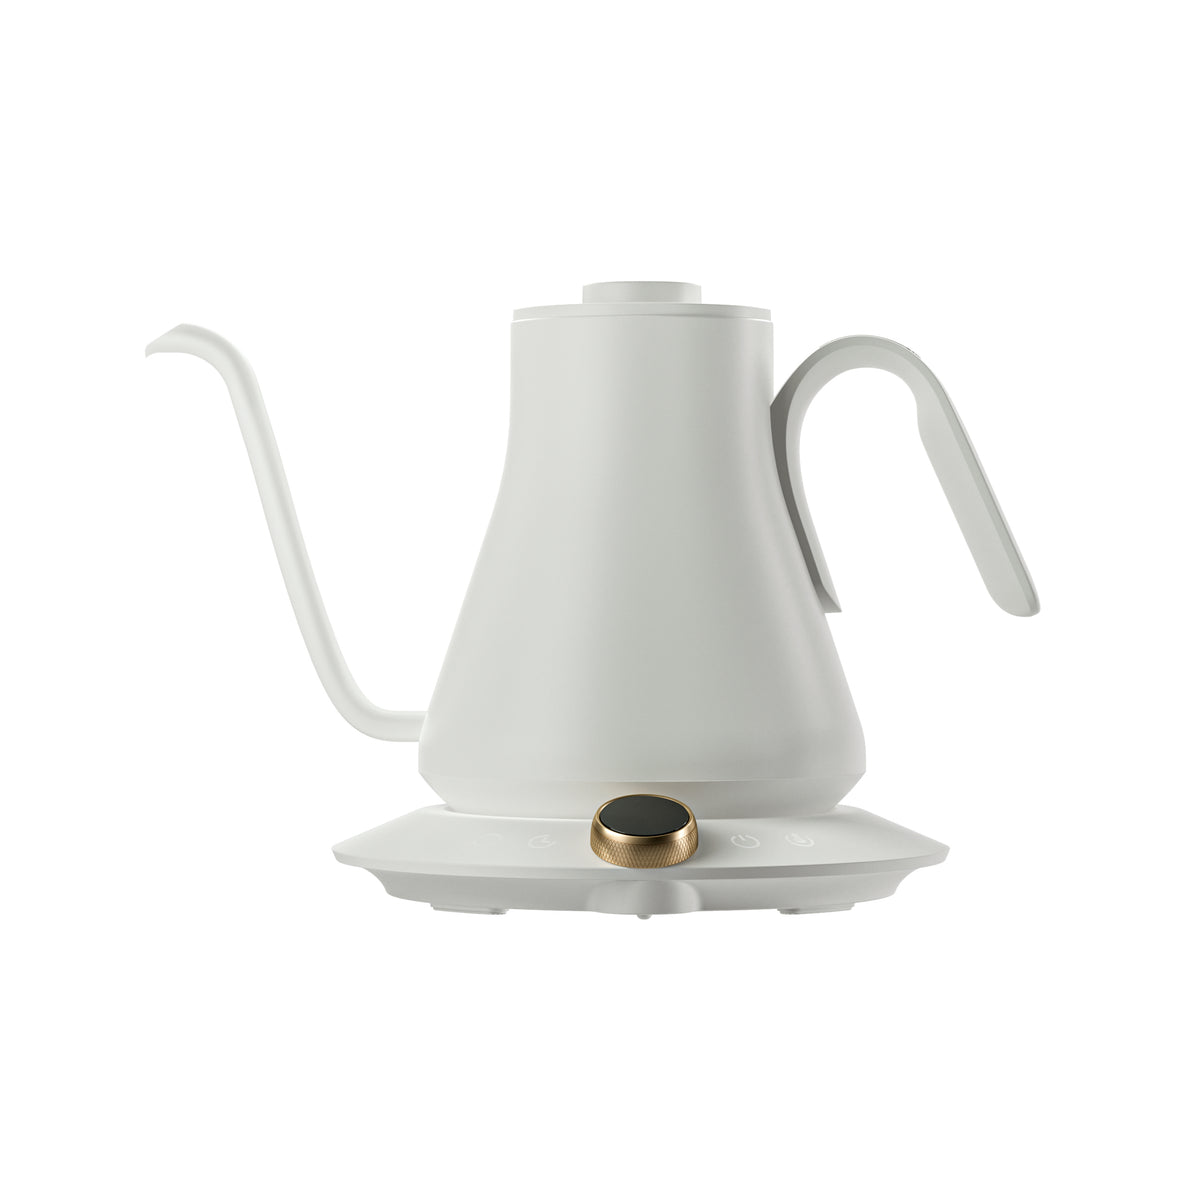 Our gooseneck electric water kettle features a gooseneck spout for